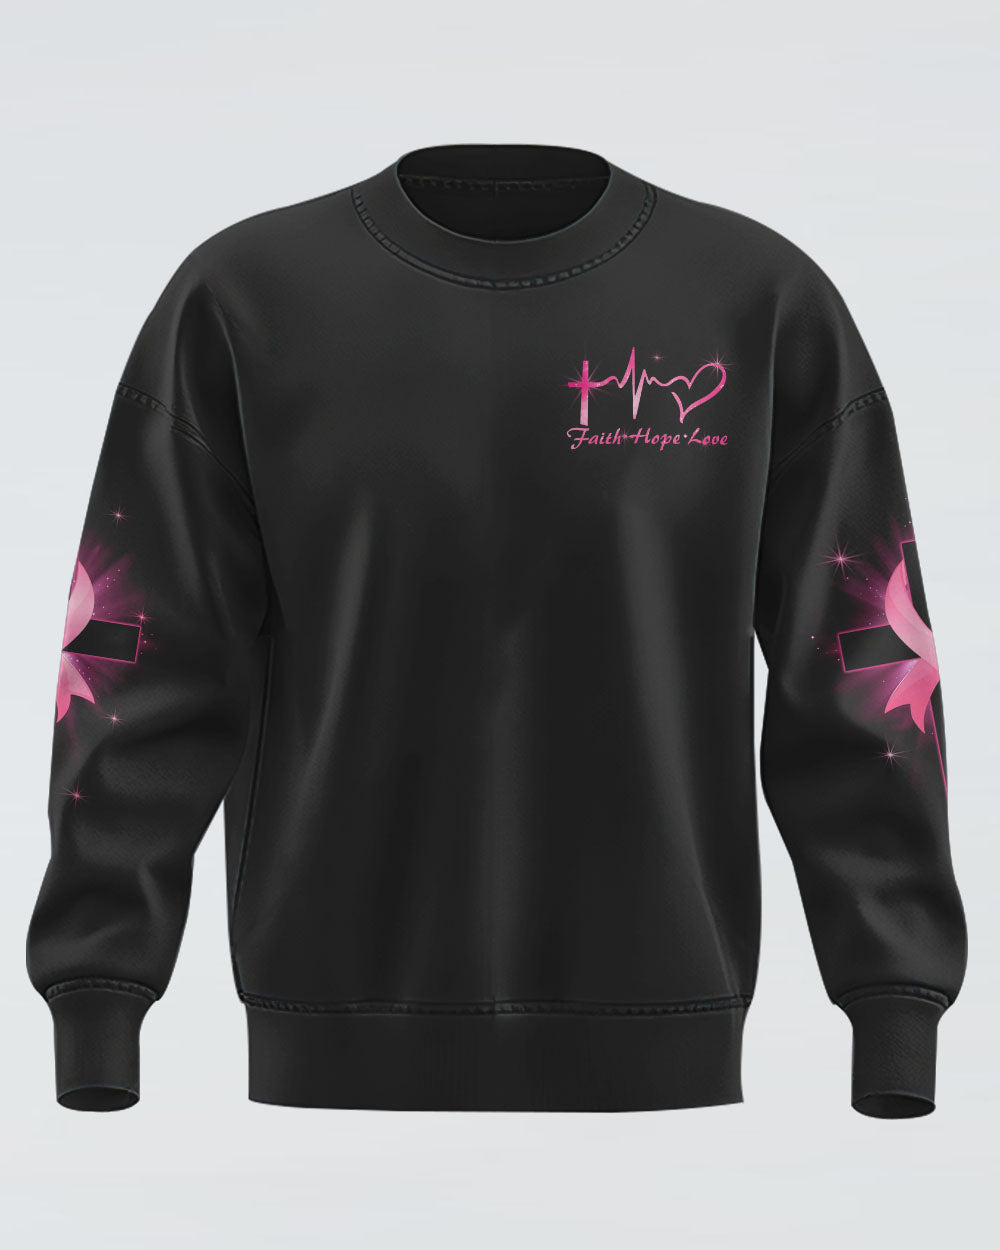 Fight Cross Wings Light Women's Breast Cancer Awareness Sweatshirt